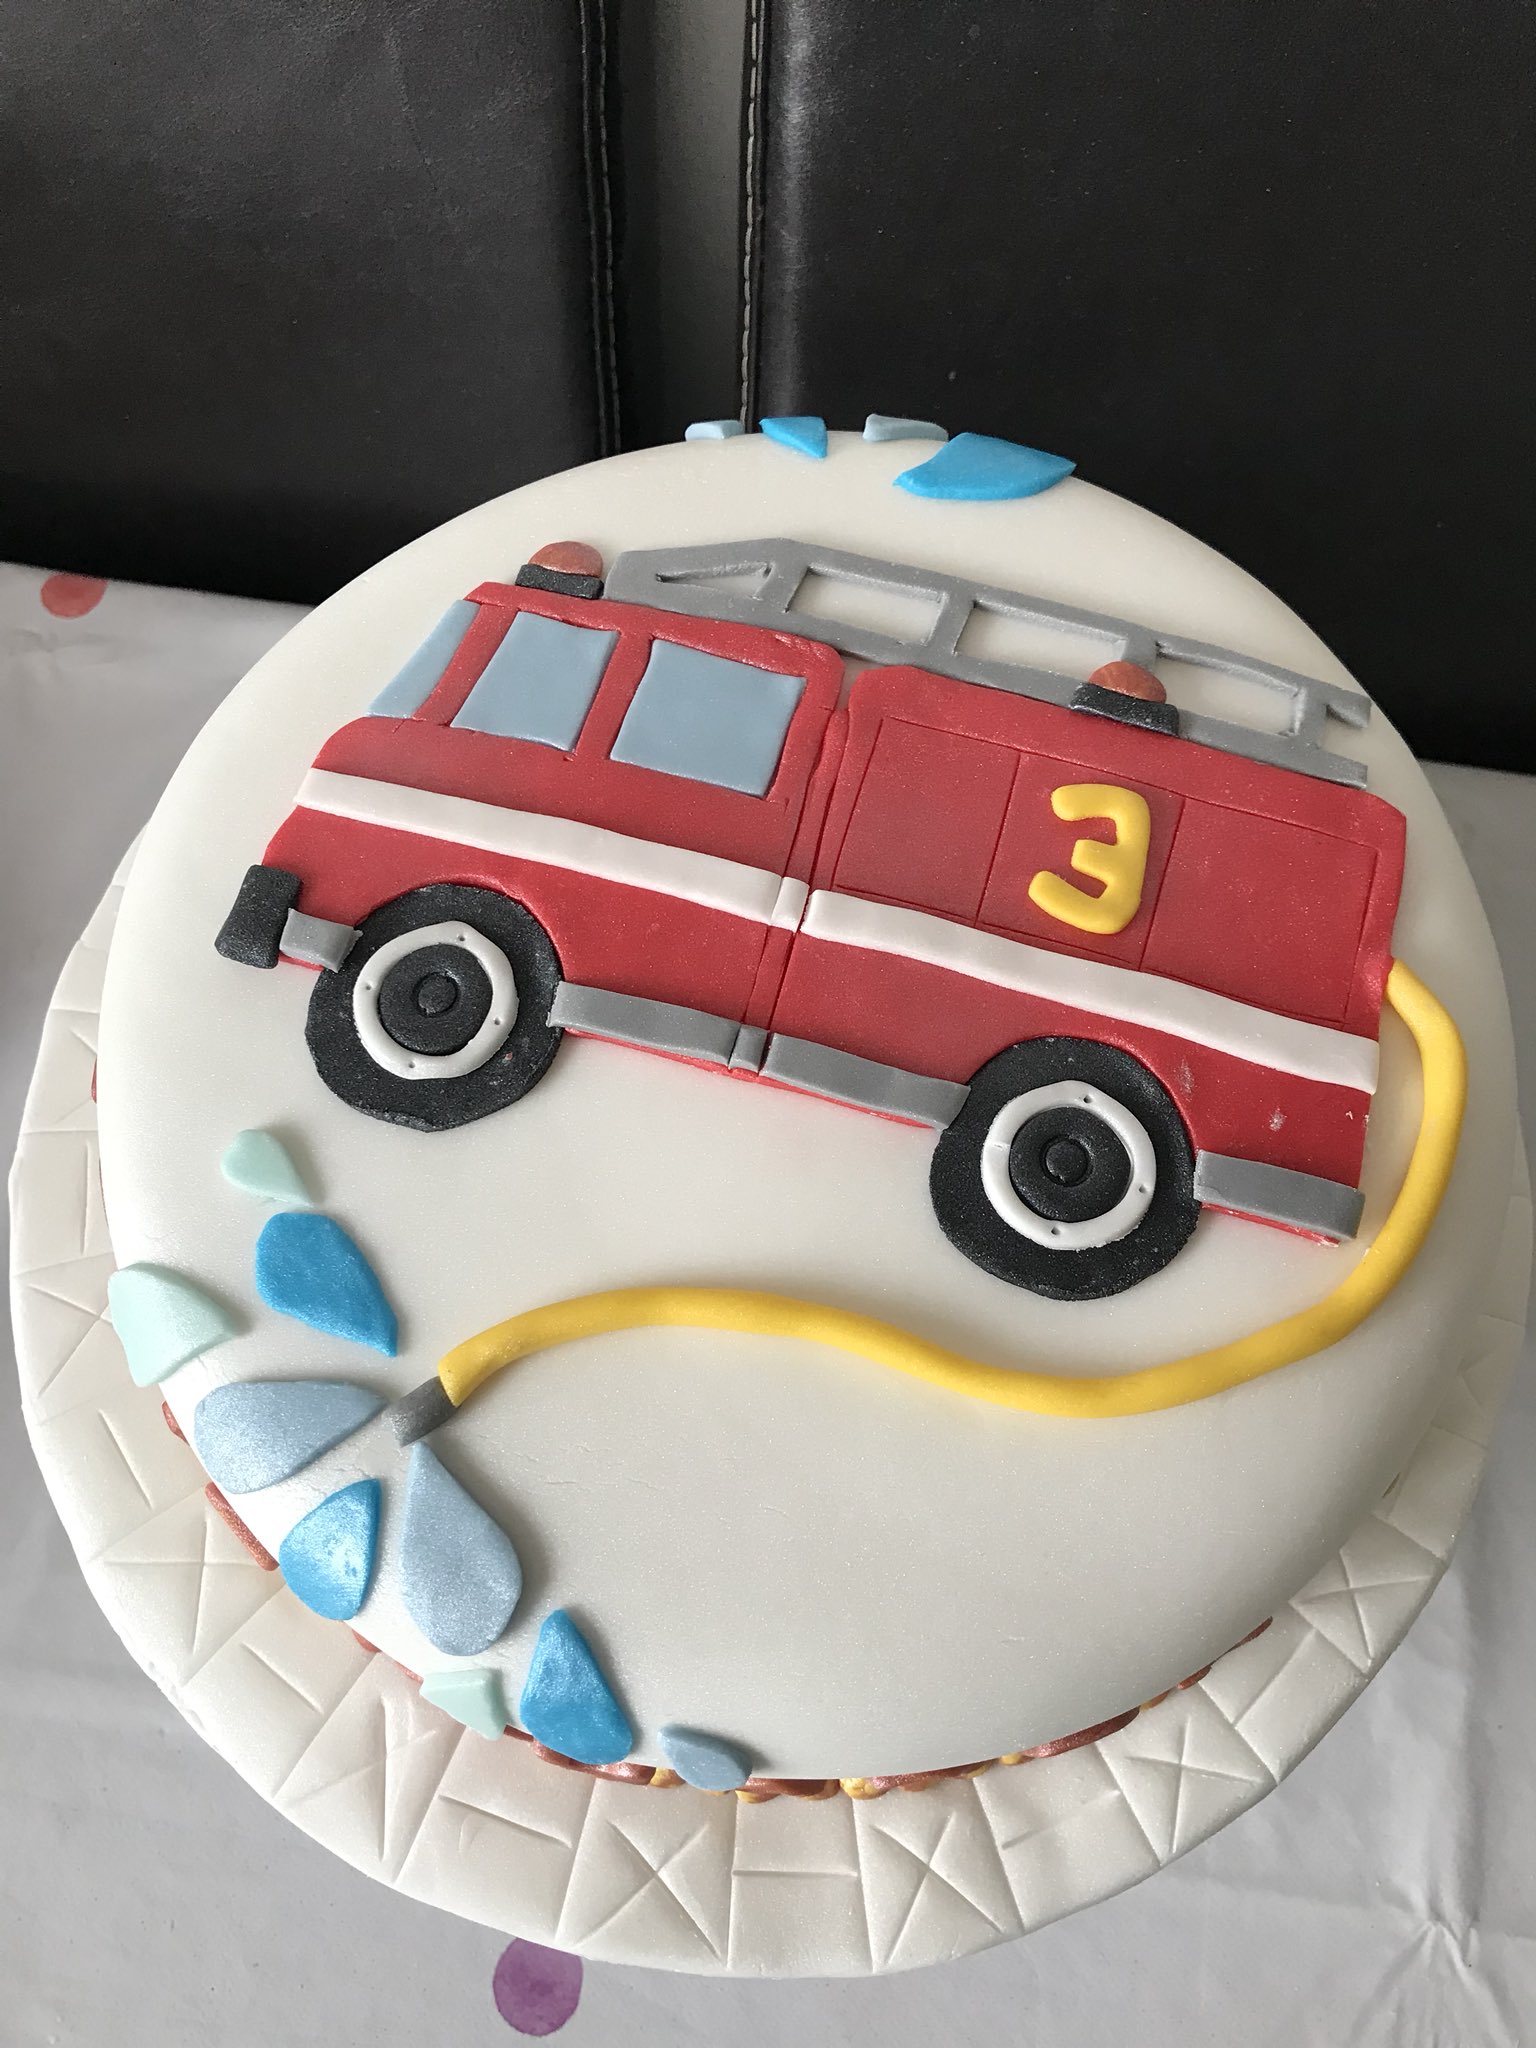 Fire Truck Cake Topper, Fondant, Handmade Edible, Firetruck cake decorations,  car transportation birthday cake, emergency services cake